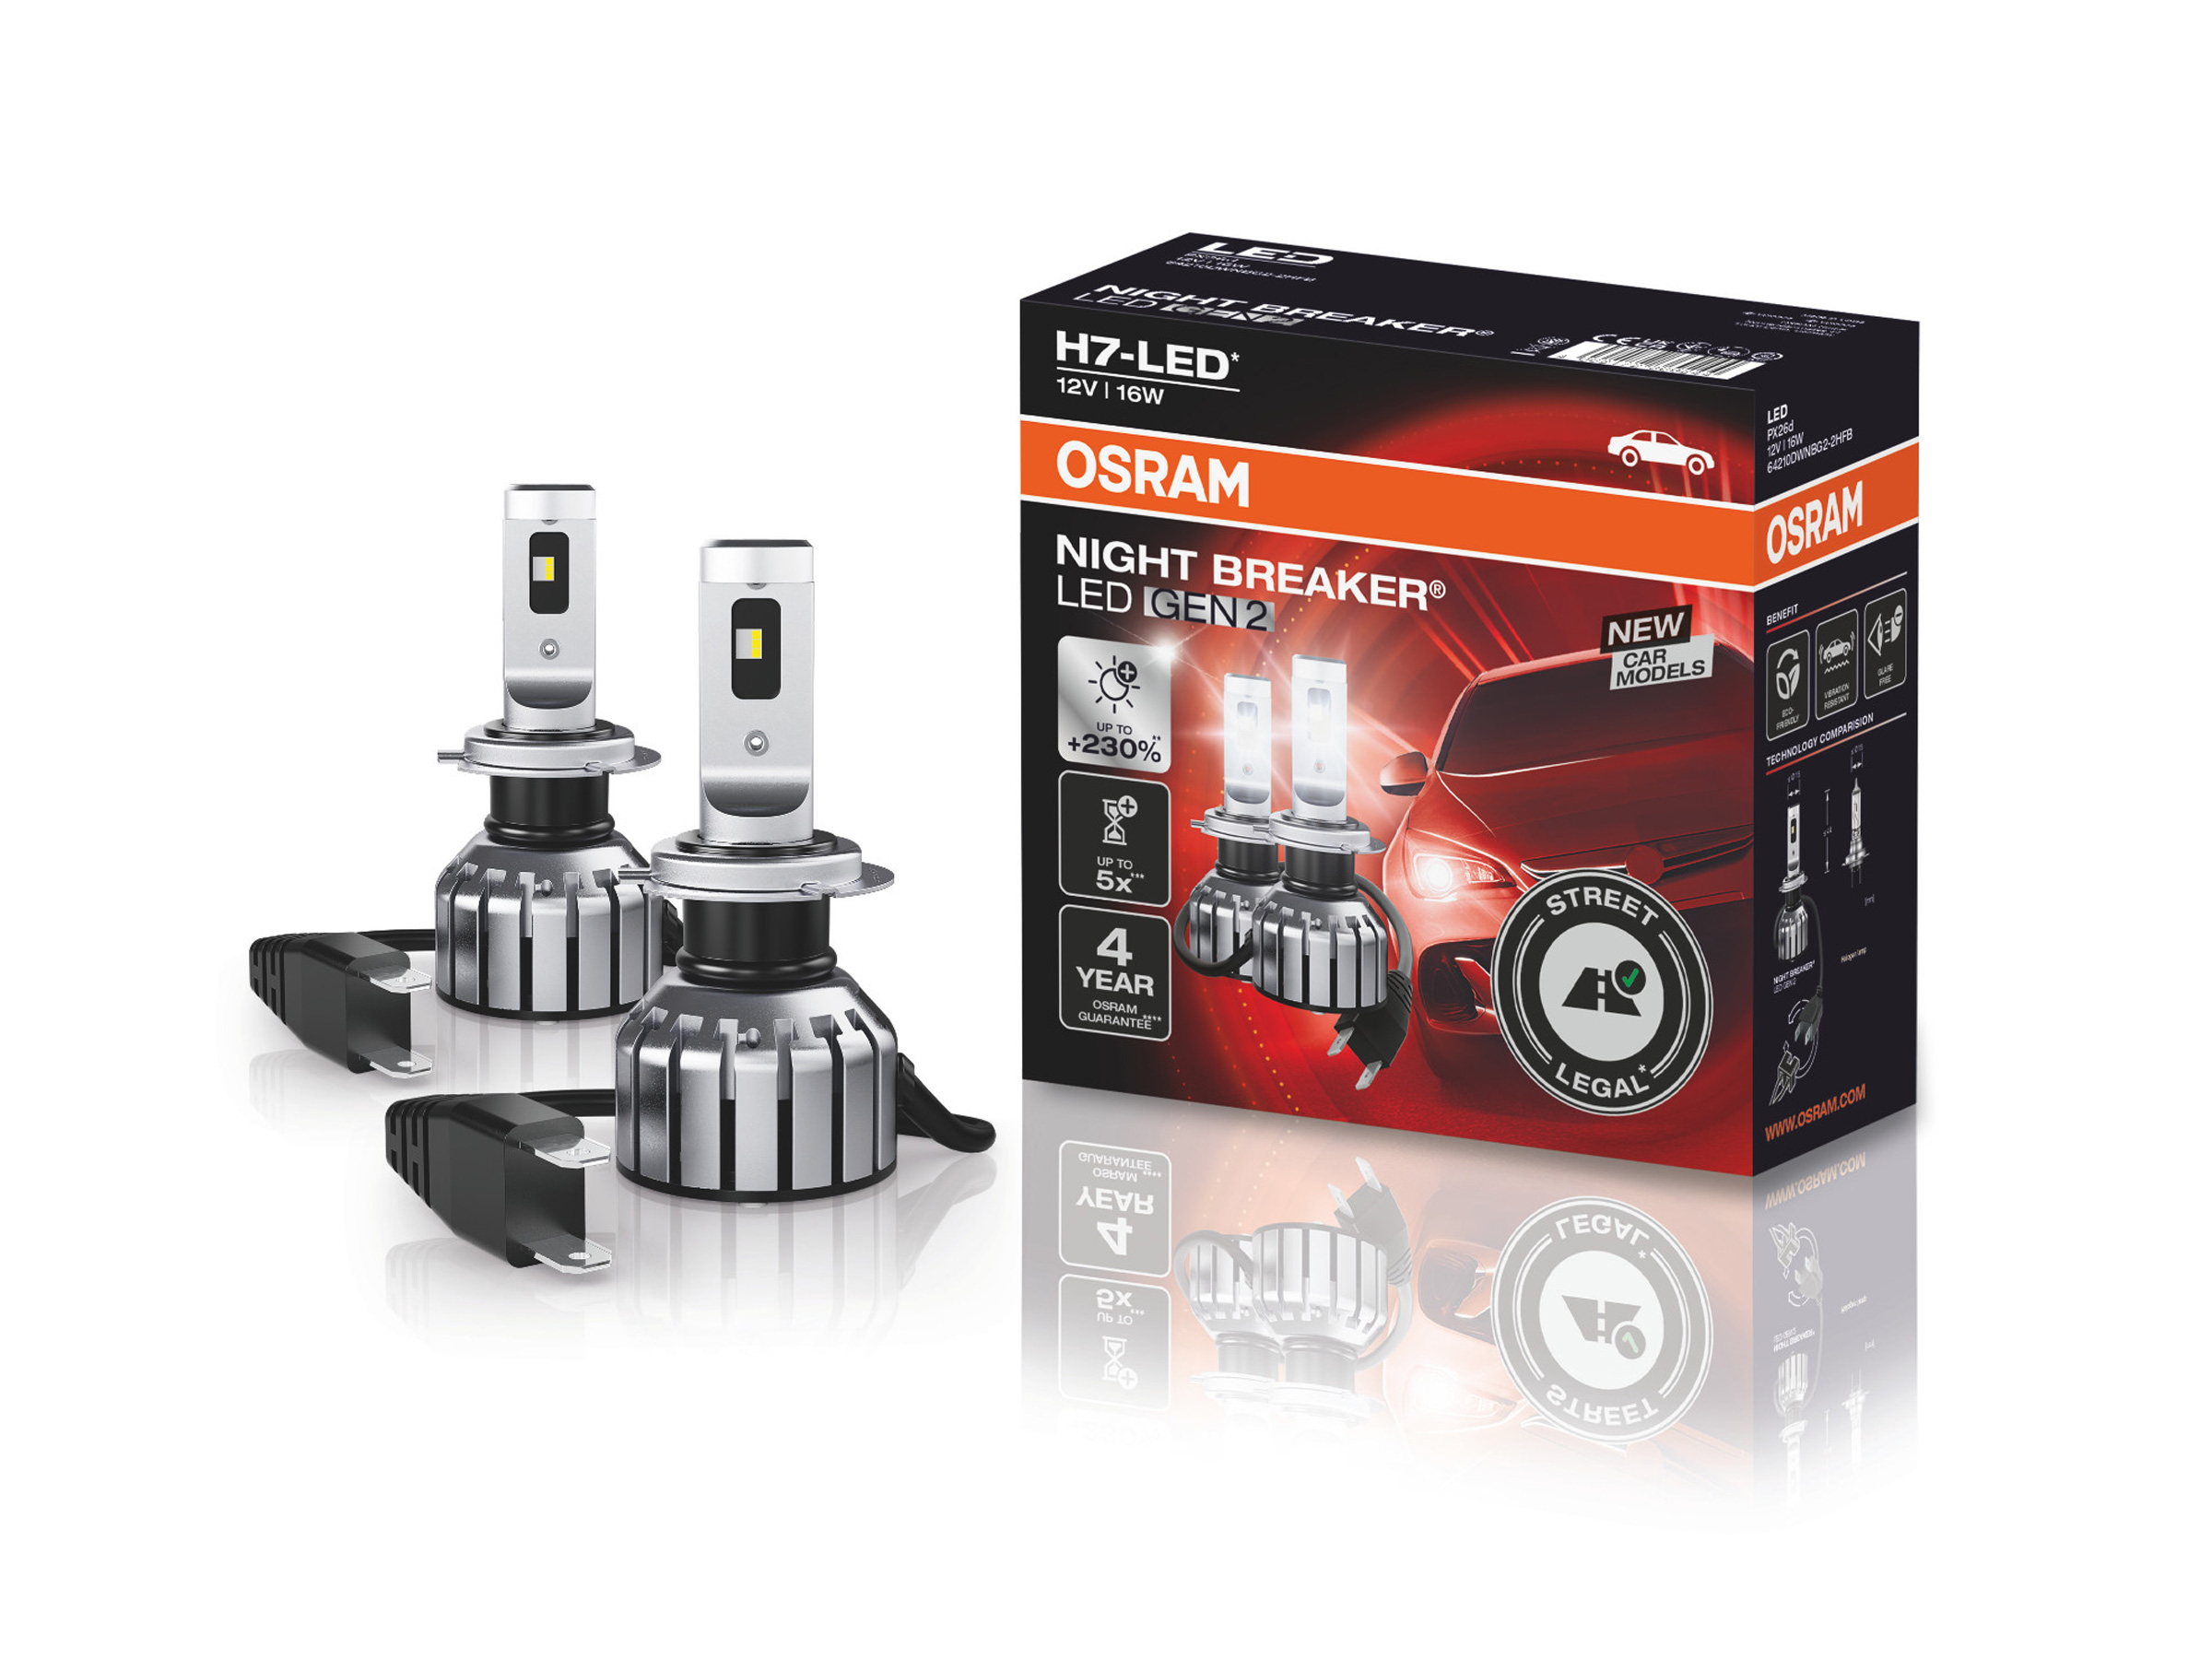 OSRAM Night Breaker H7 LED Nachrüstlampen + Adapter für VW Crafter 2 2017-, VW, Night Breaker LED (fahrzeugspezifisch), OSRAM Night Breaker LED, Beleuchtung